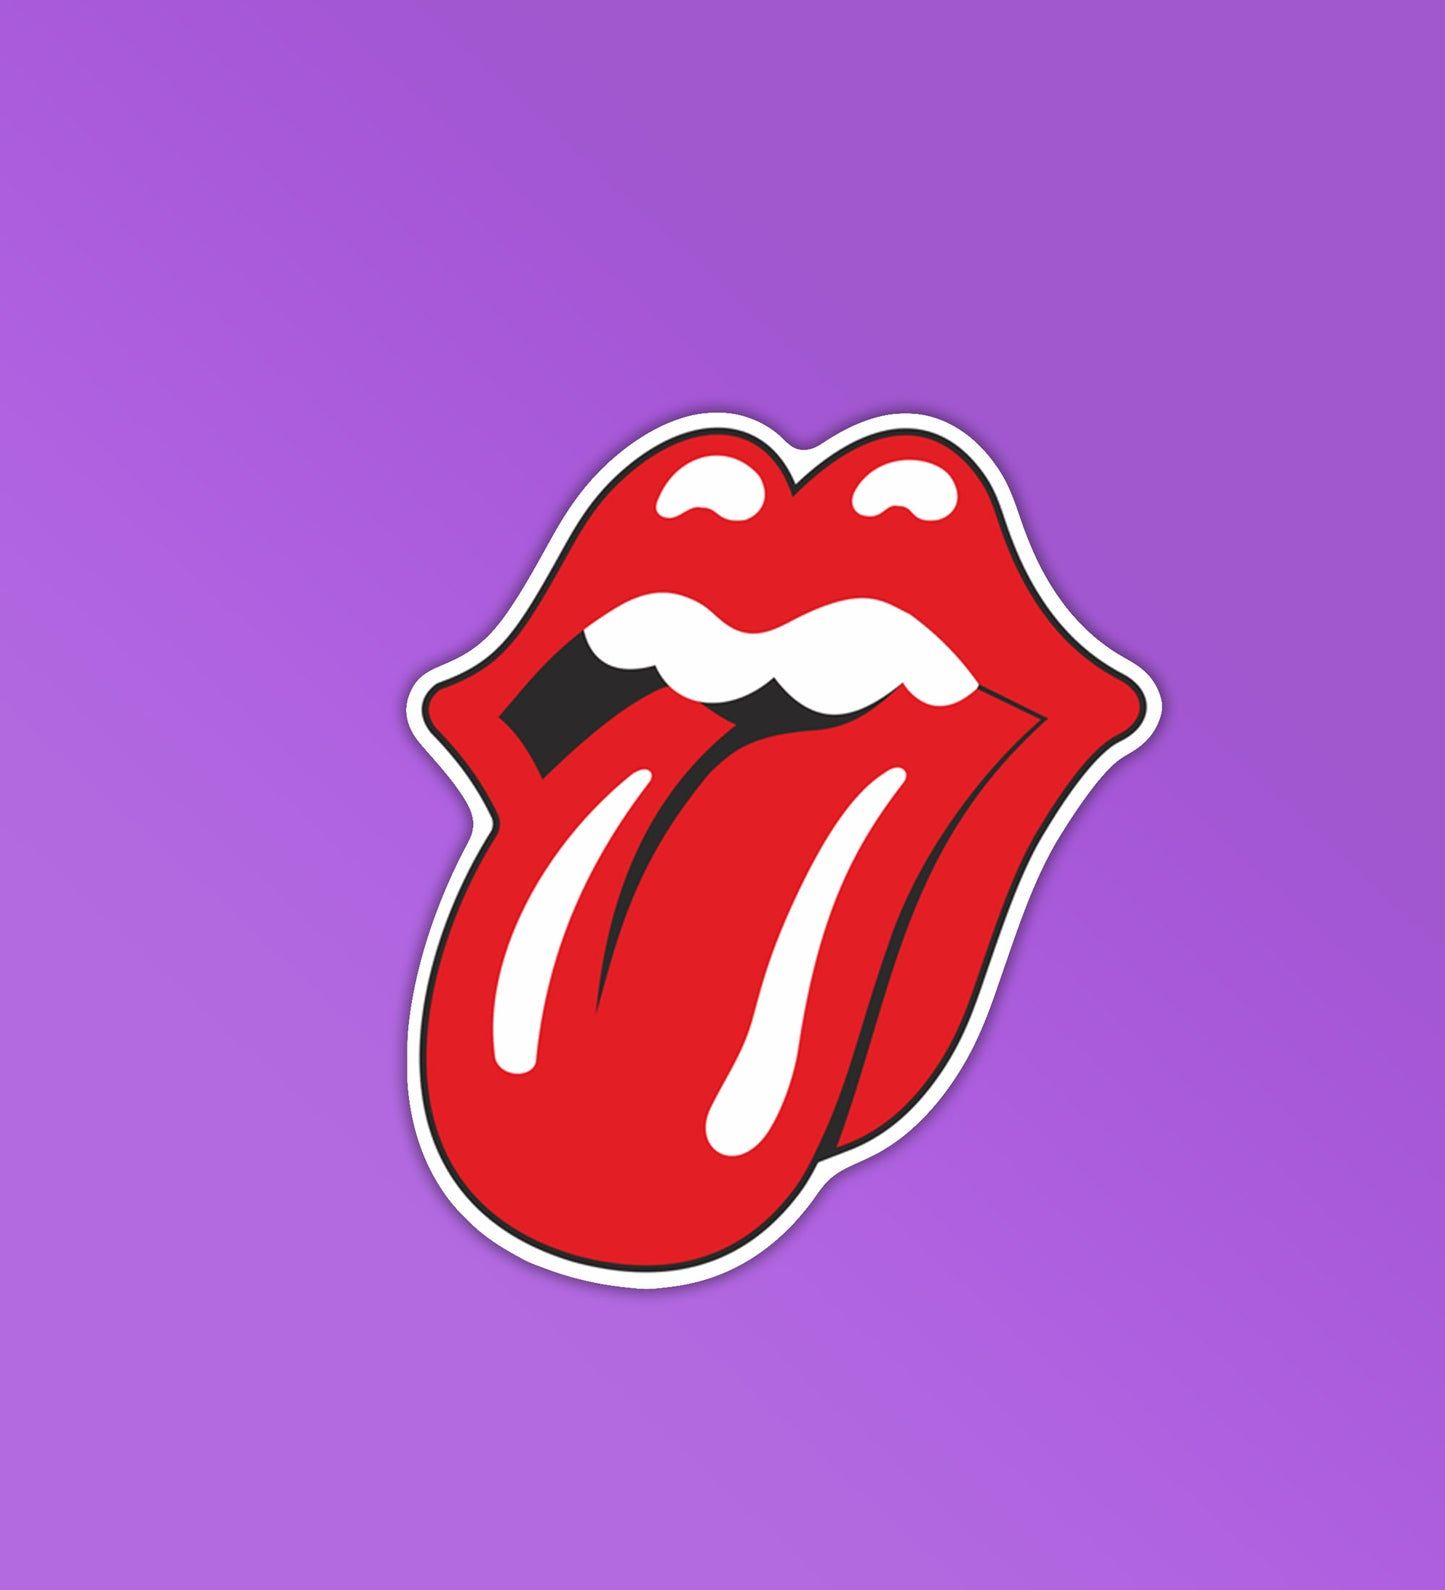 Rolling Stones Sticker